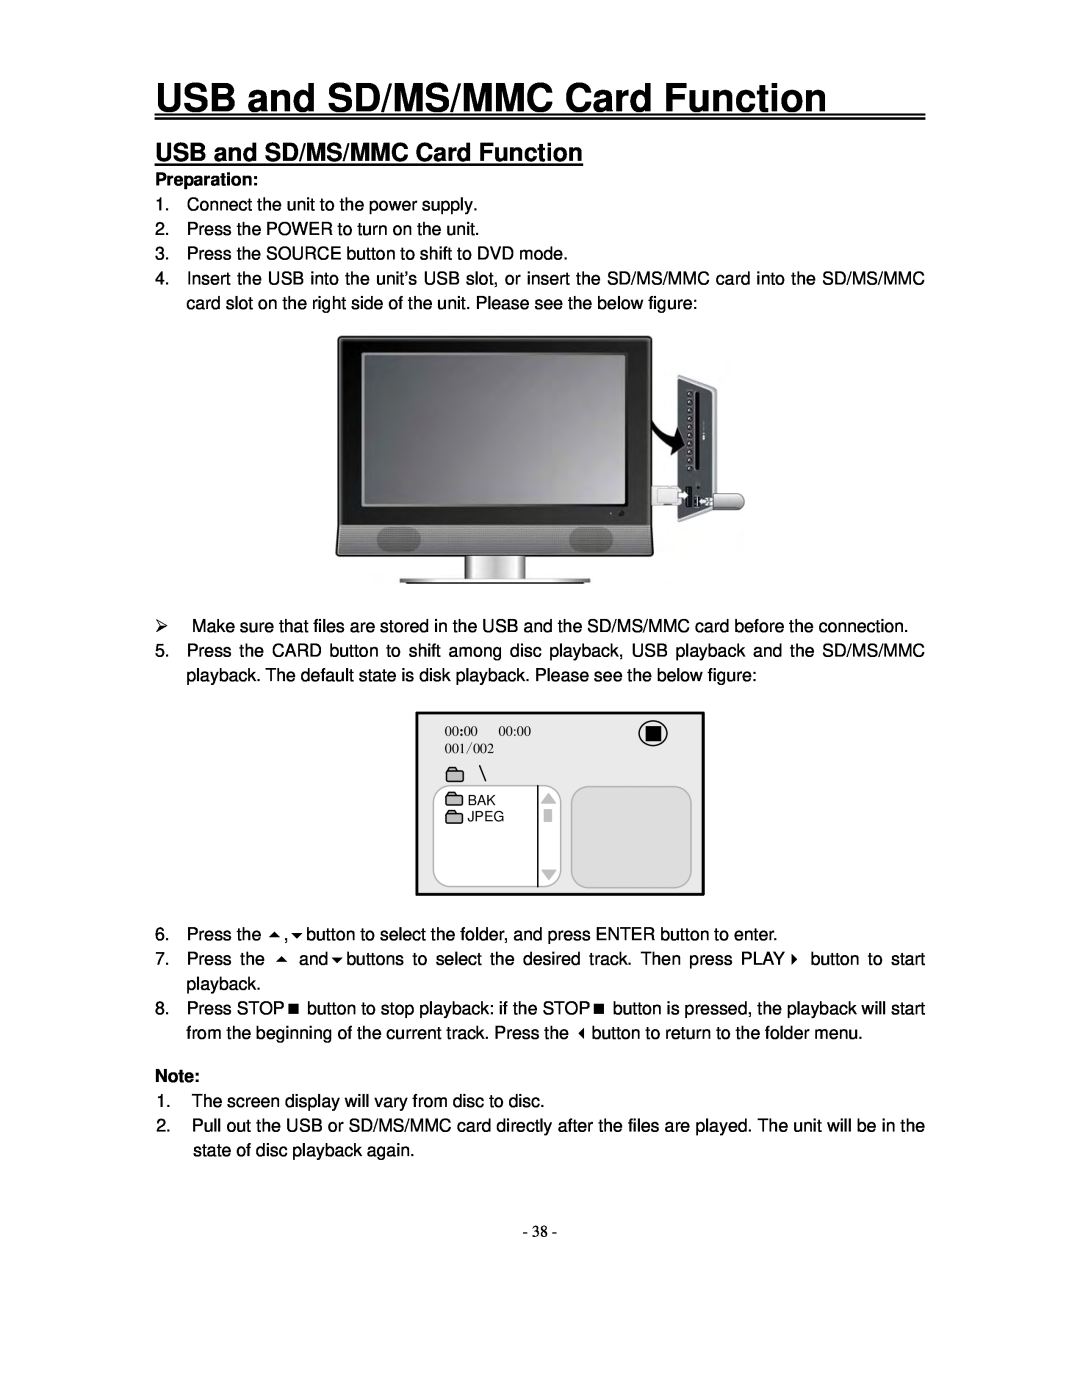 Polaroid FXM-1911C manual USB and SD/MS/MMC Card Function, Preparation 